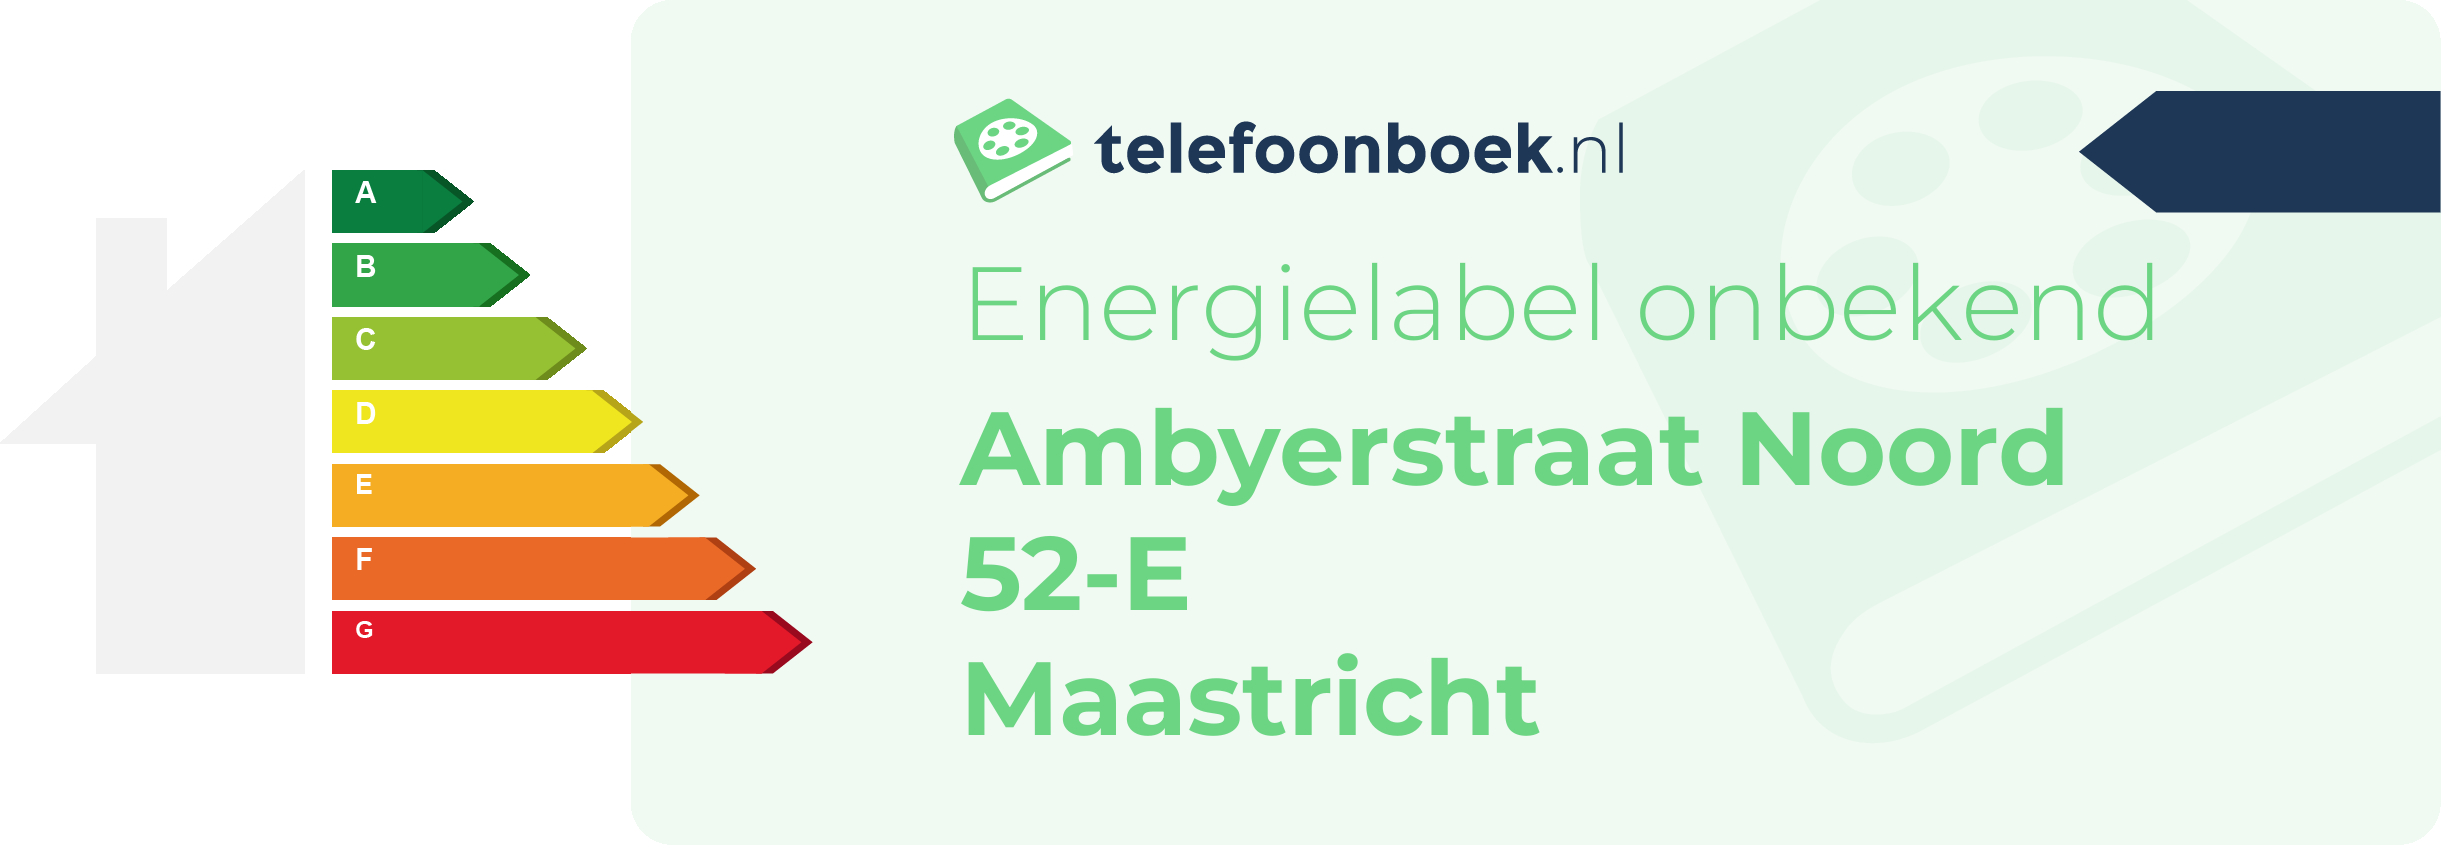 Energielabel Ambyerstraat Noord 52-E Maastricht